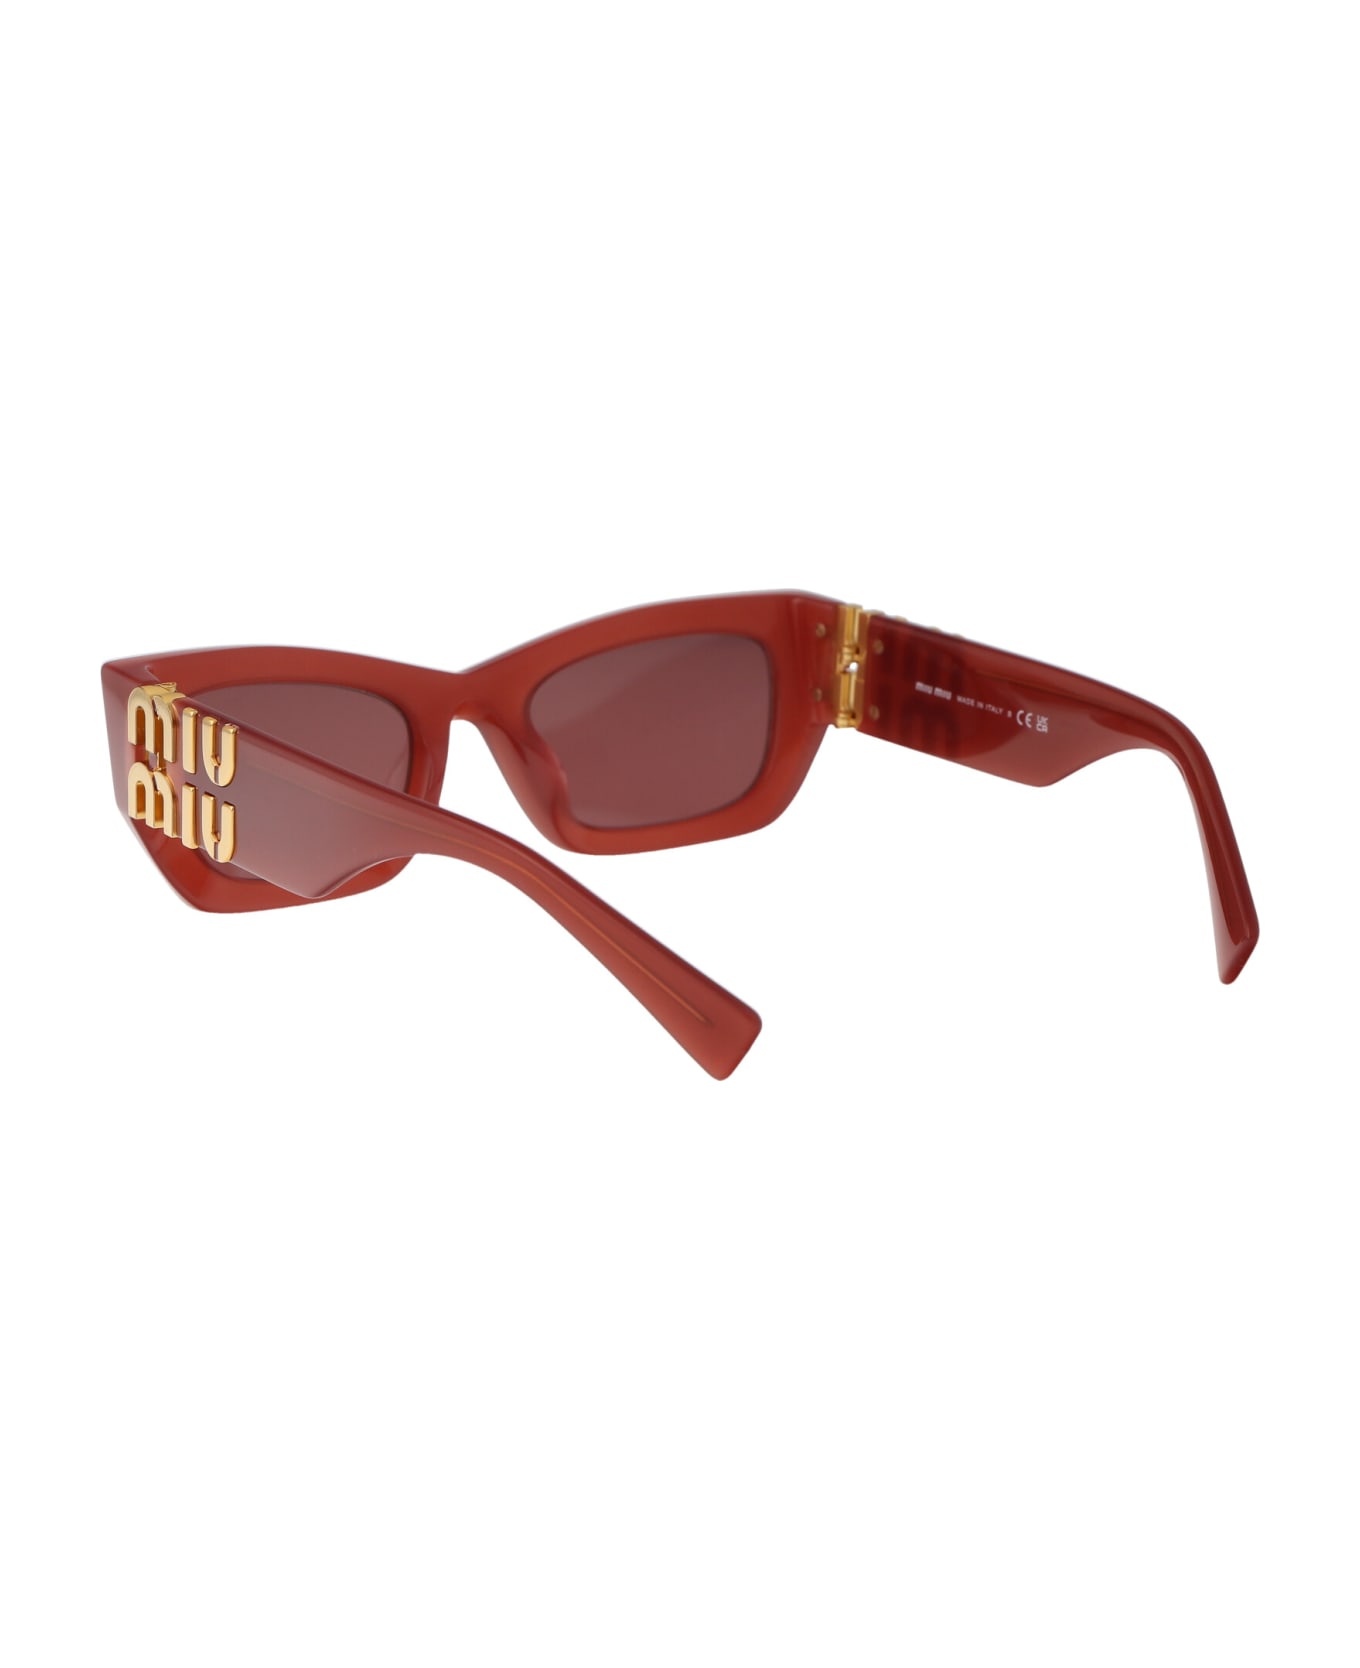 Miu Miu Eyewear 0mu 09ws Sunglasses - 10Bold Round leopard-print sunglasses